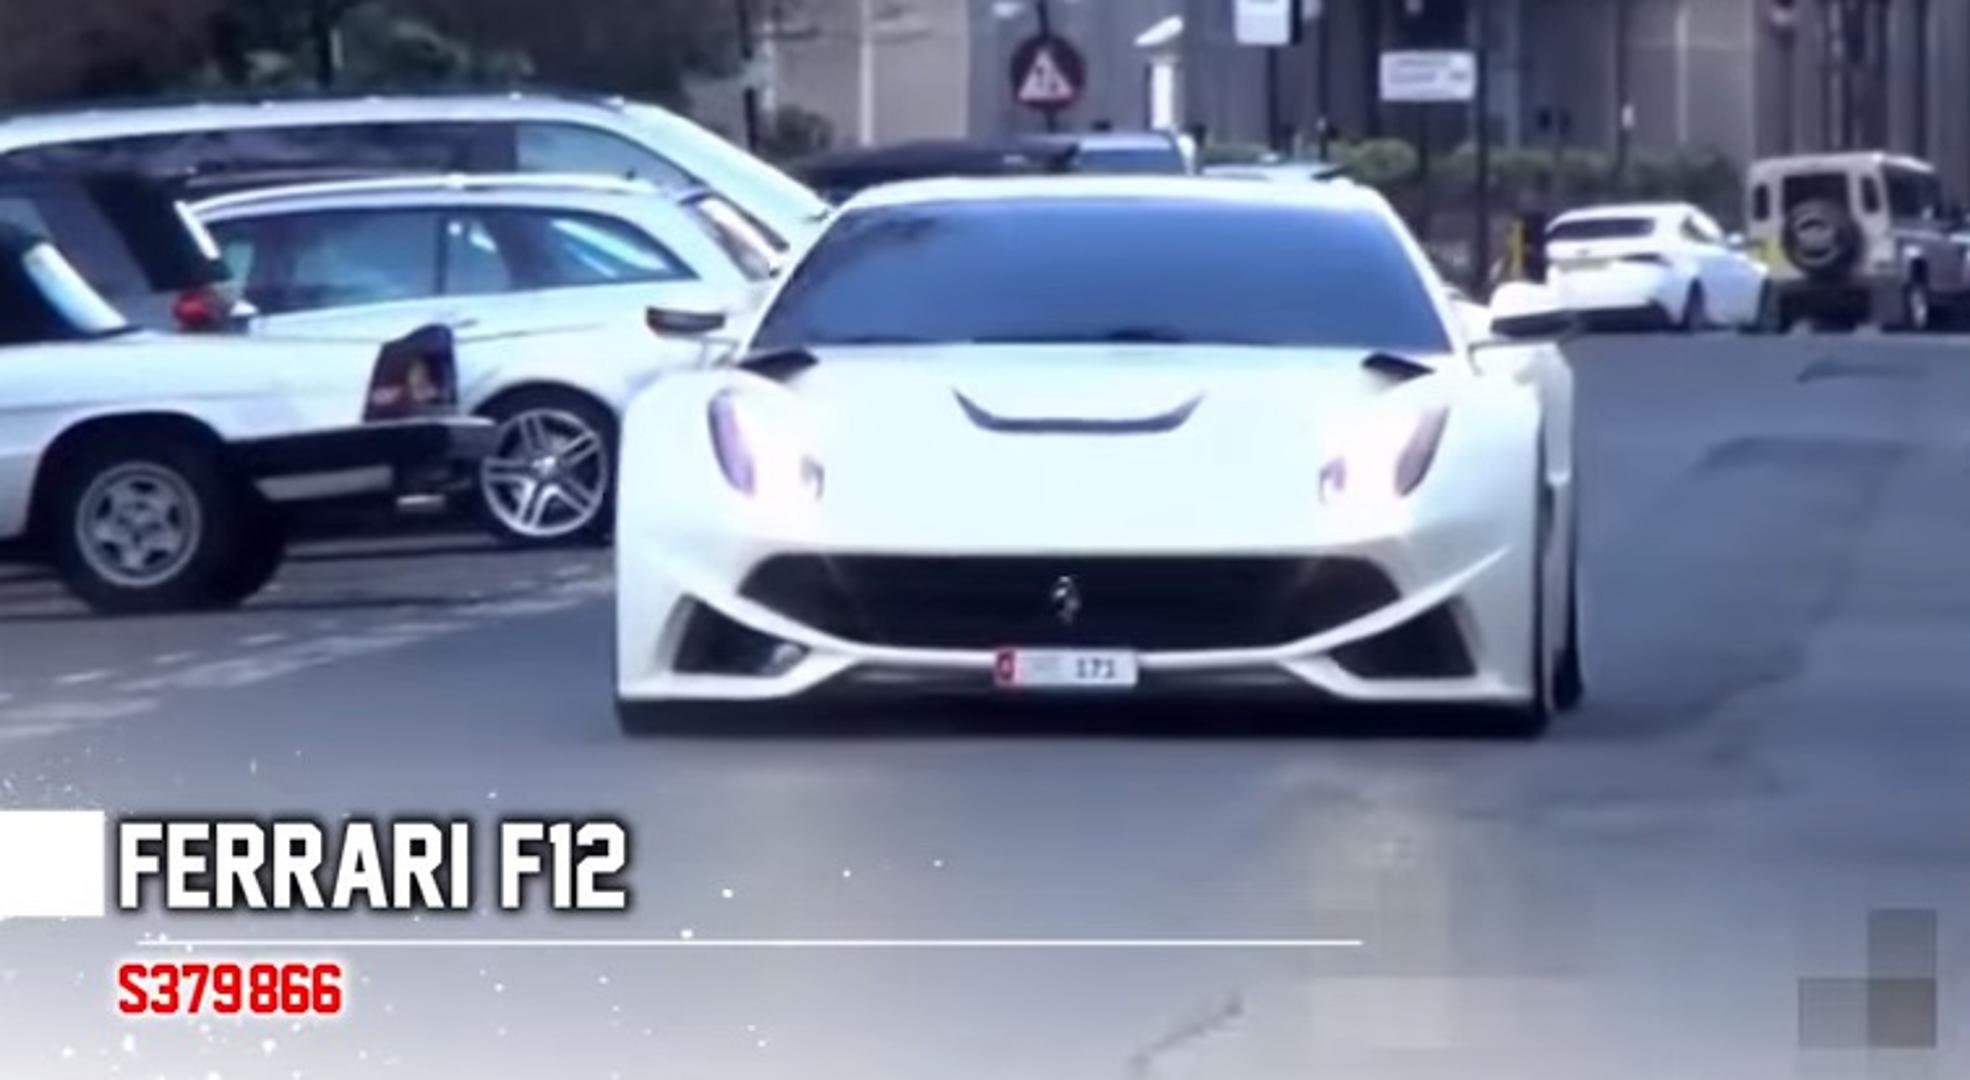 Ferrari F12 - 379.866 dolara